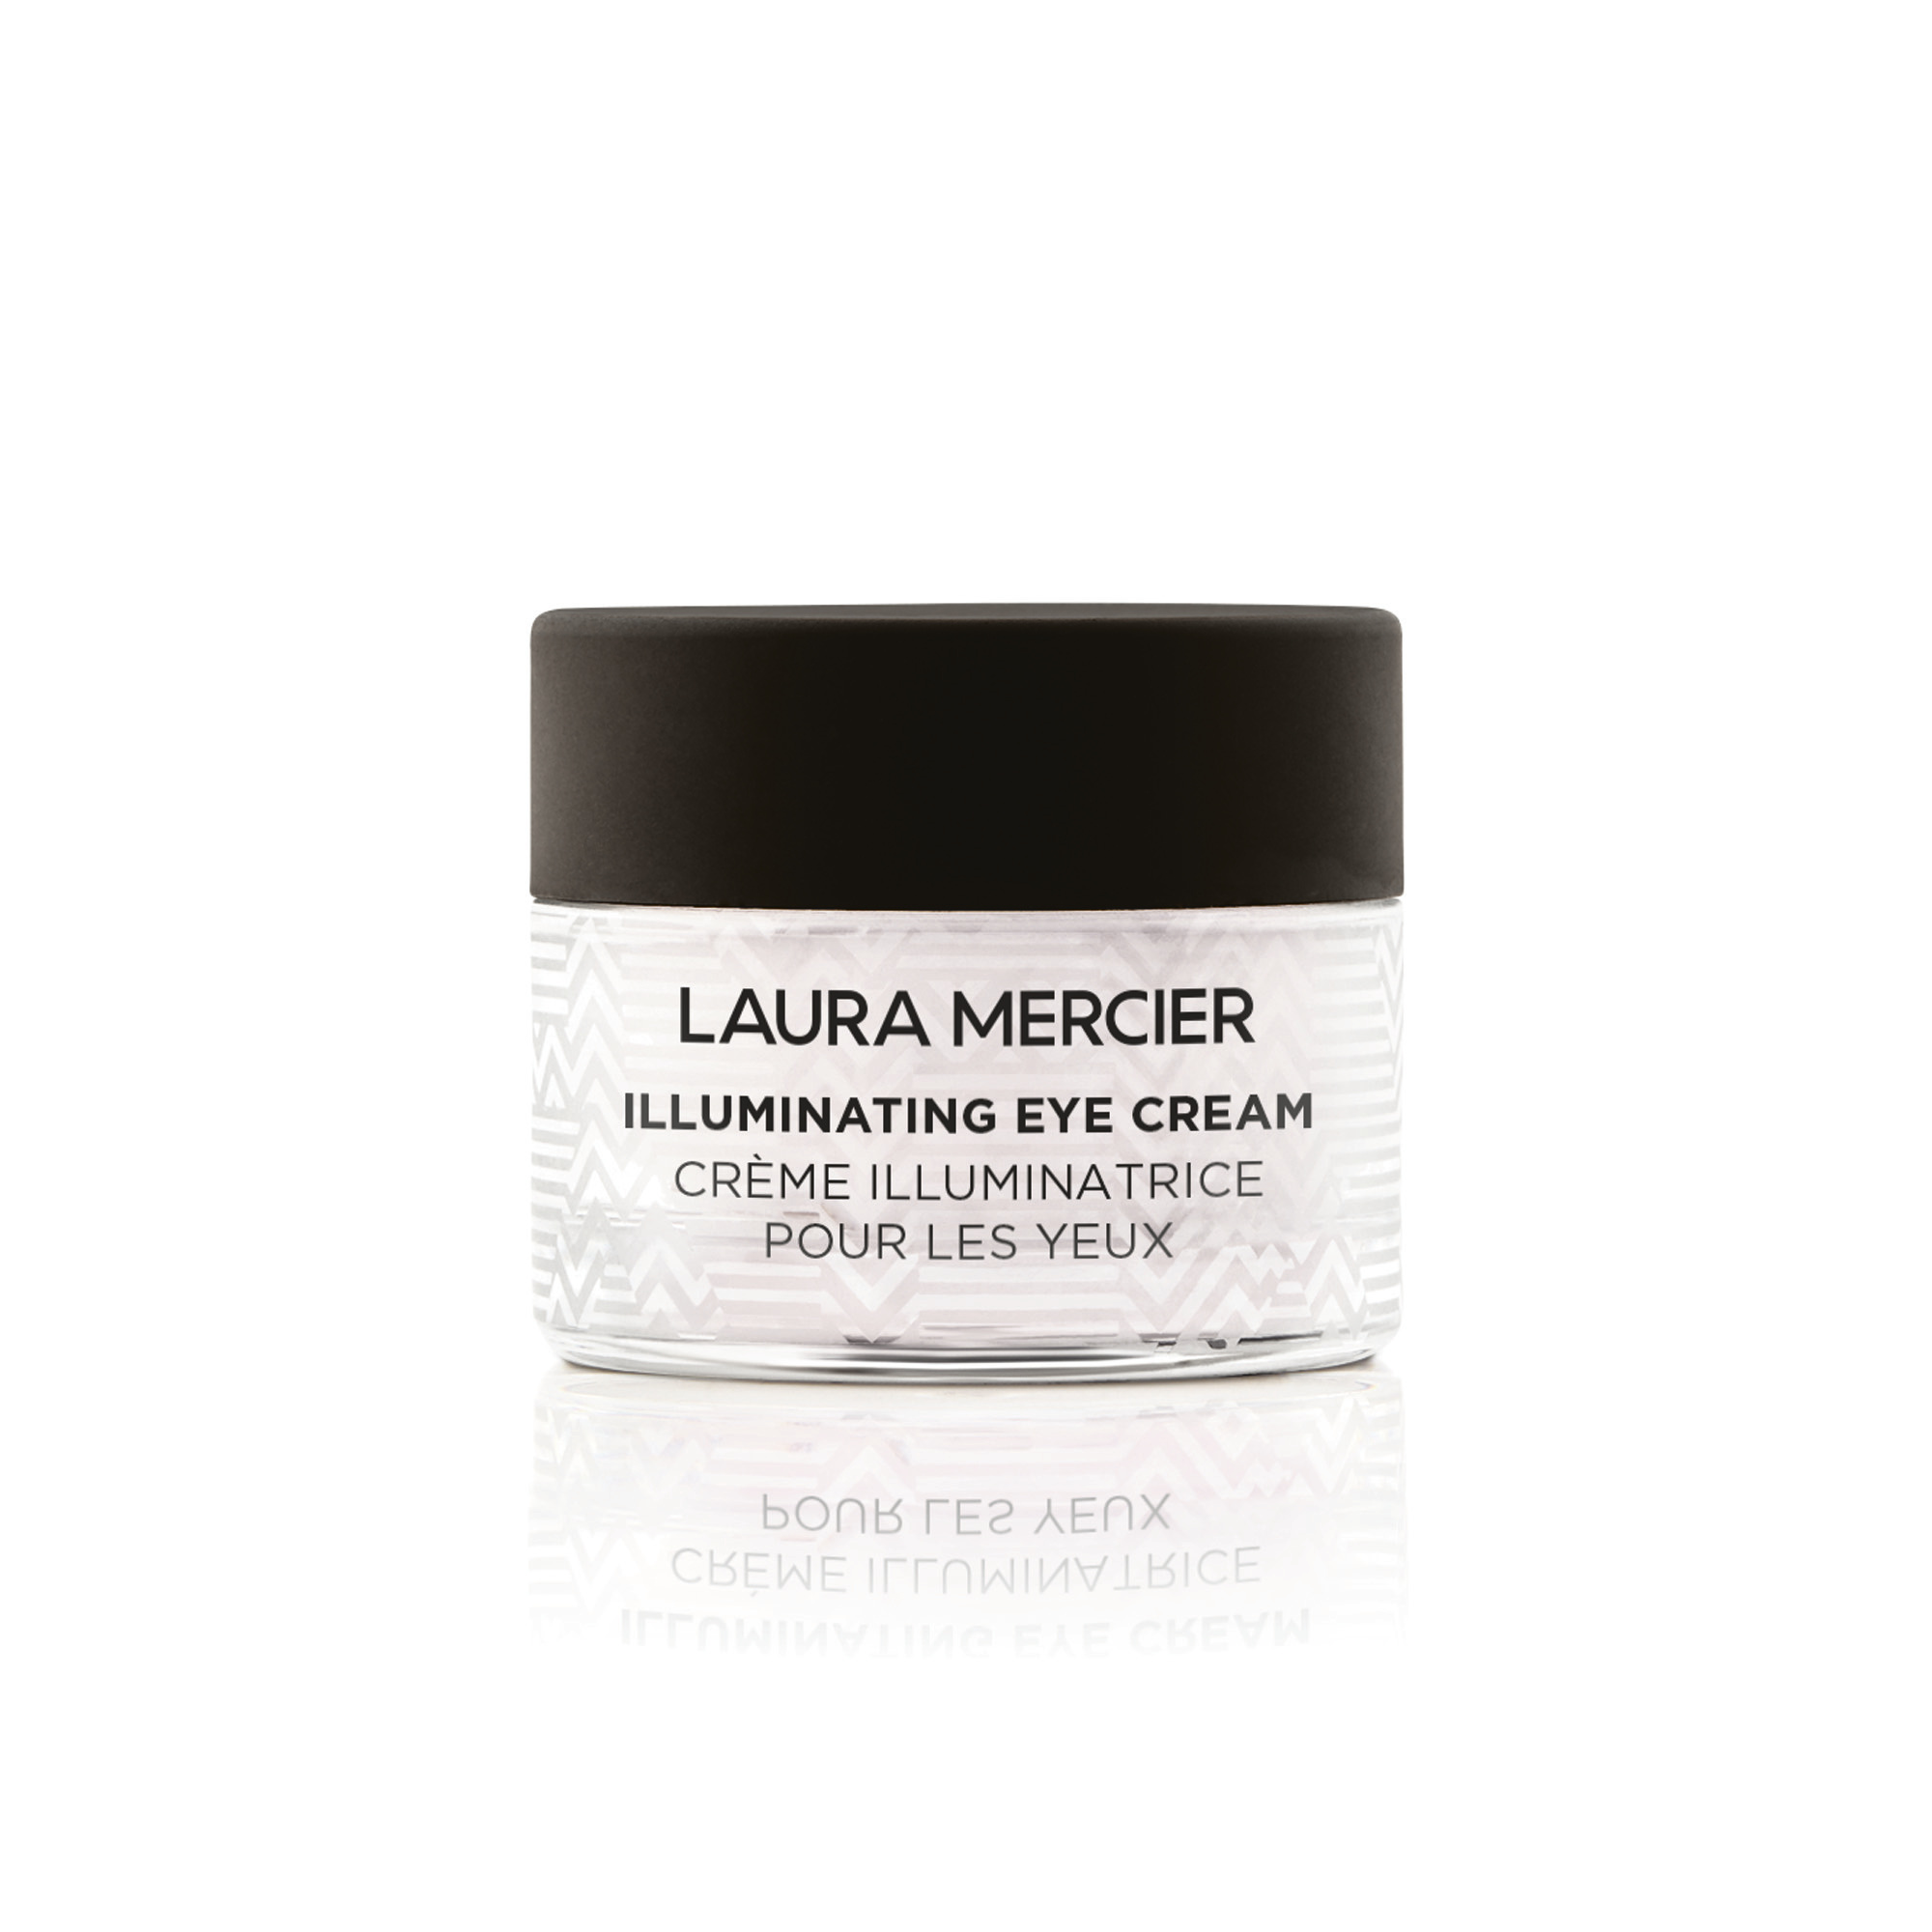 Illuminating Eye Cream 15 g - Laura Mercier - KICKS